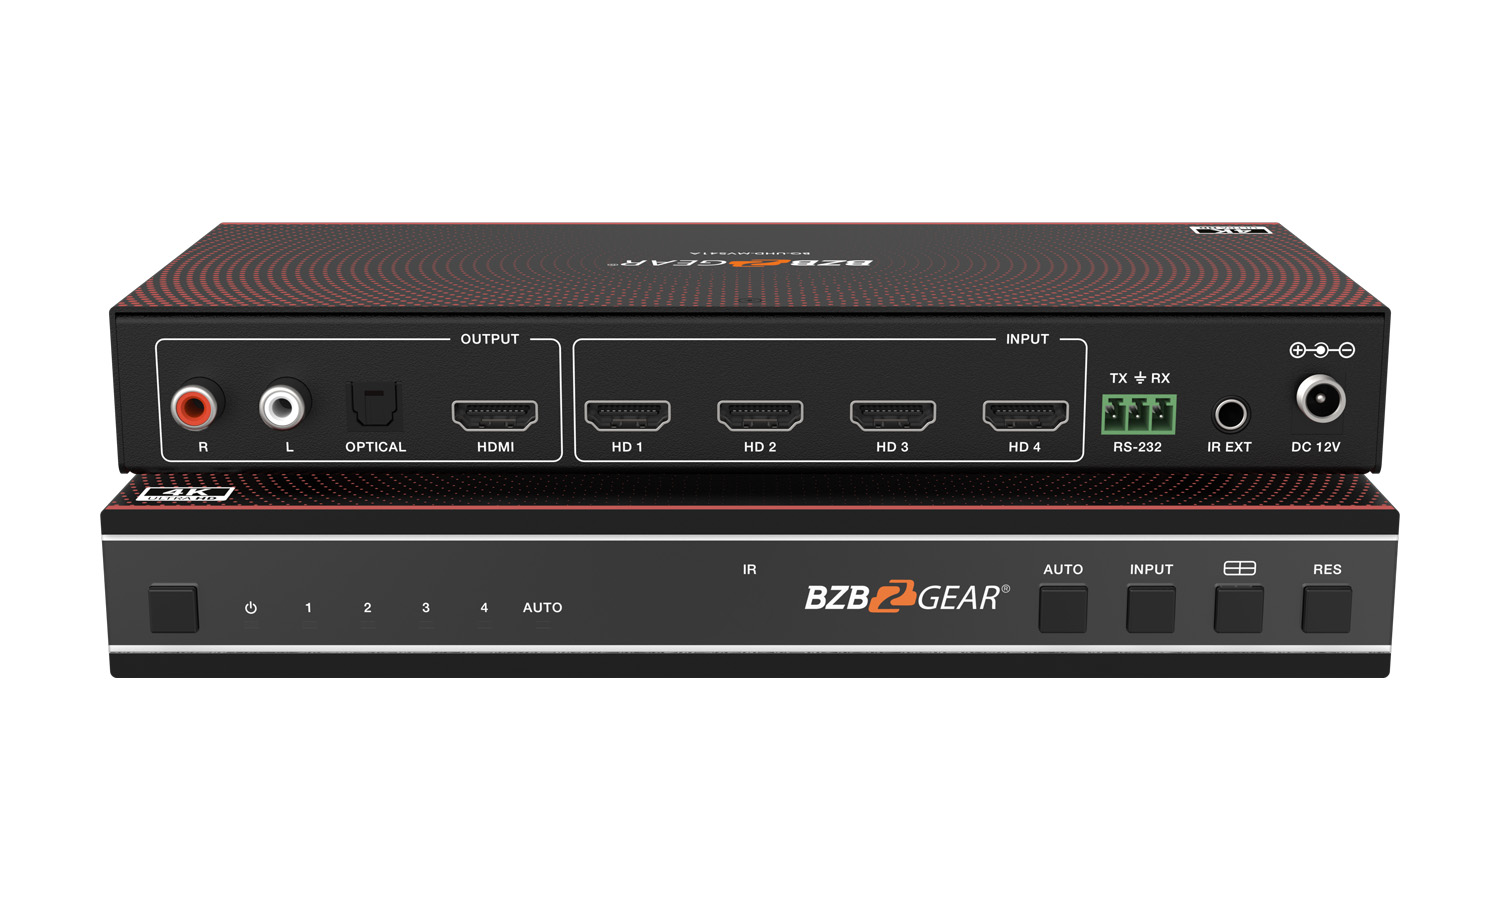 BG-UHD-MVS41A 4K UHD 18Gbps HDMI 4X1 Quad Multiviewer and Seamless Switcher with Audio De-embedder by BZBGEAR